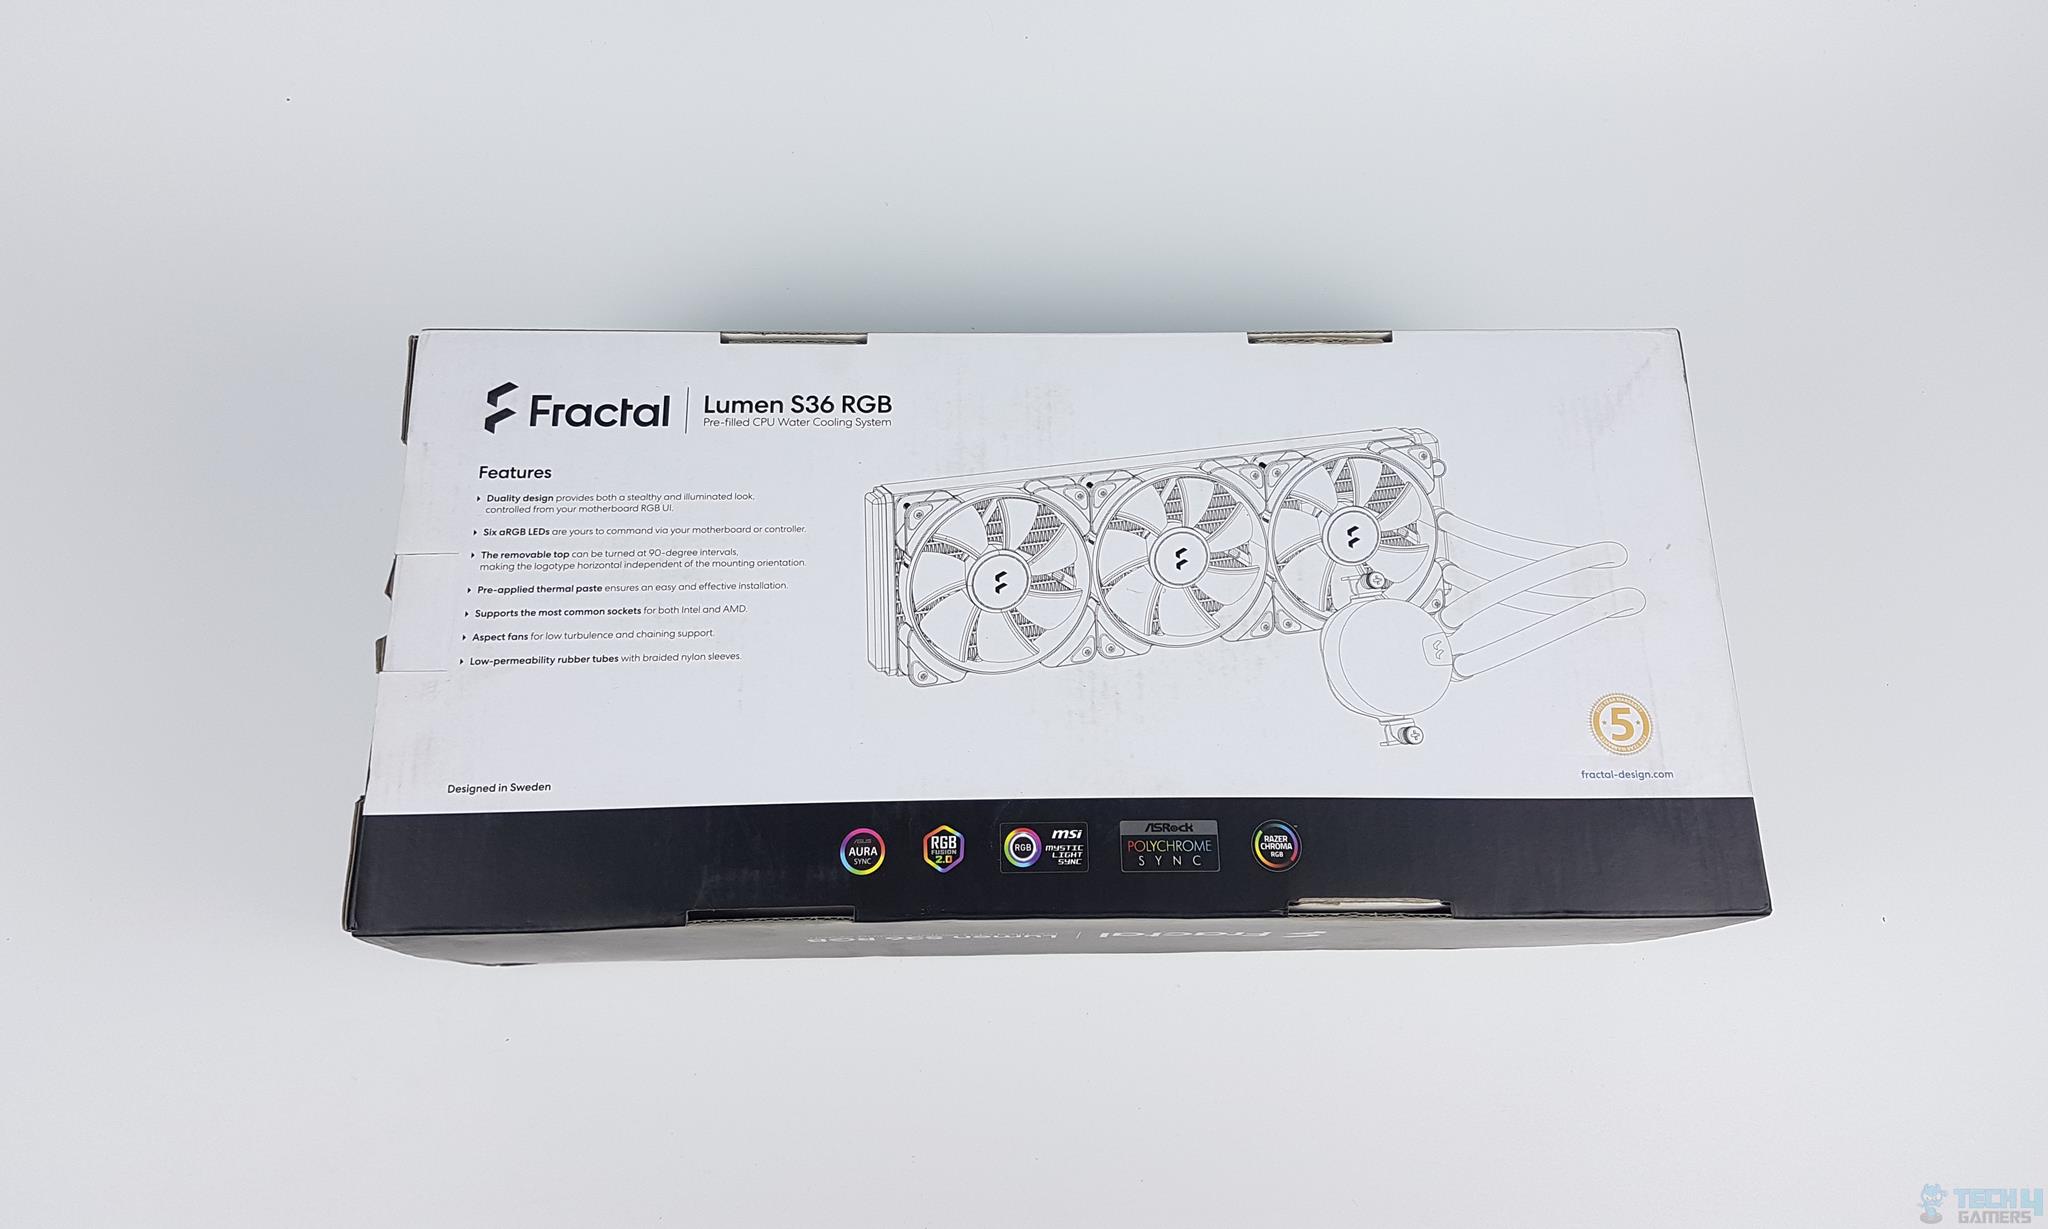 Fractal Design Lumen S36 RGB — The backside of the box